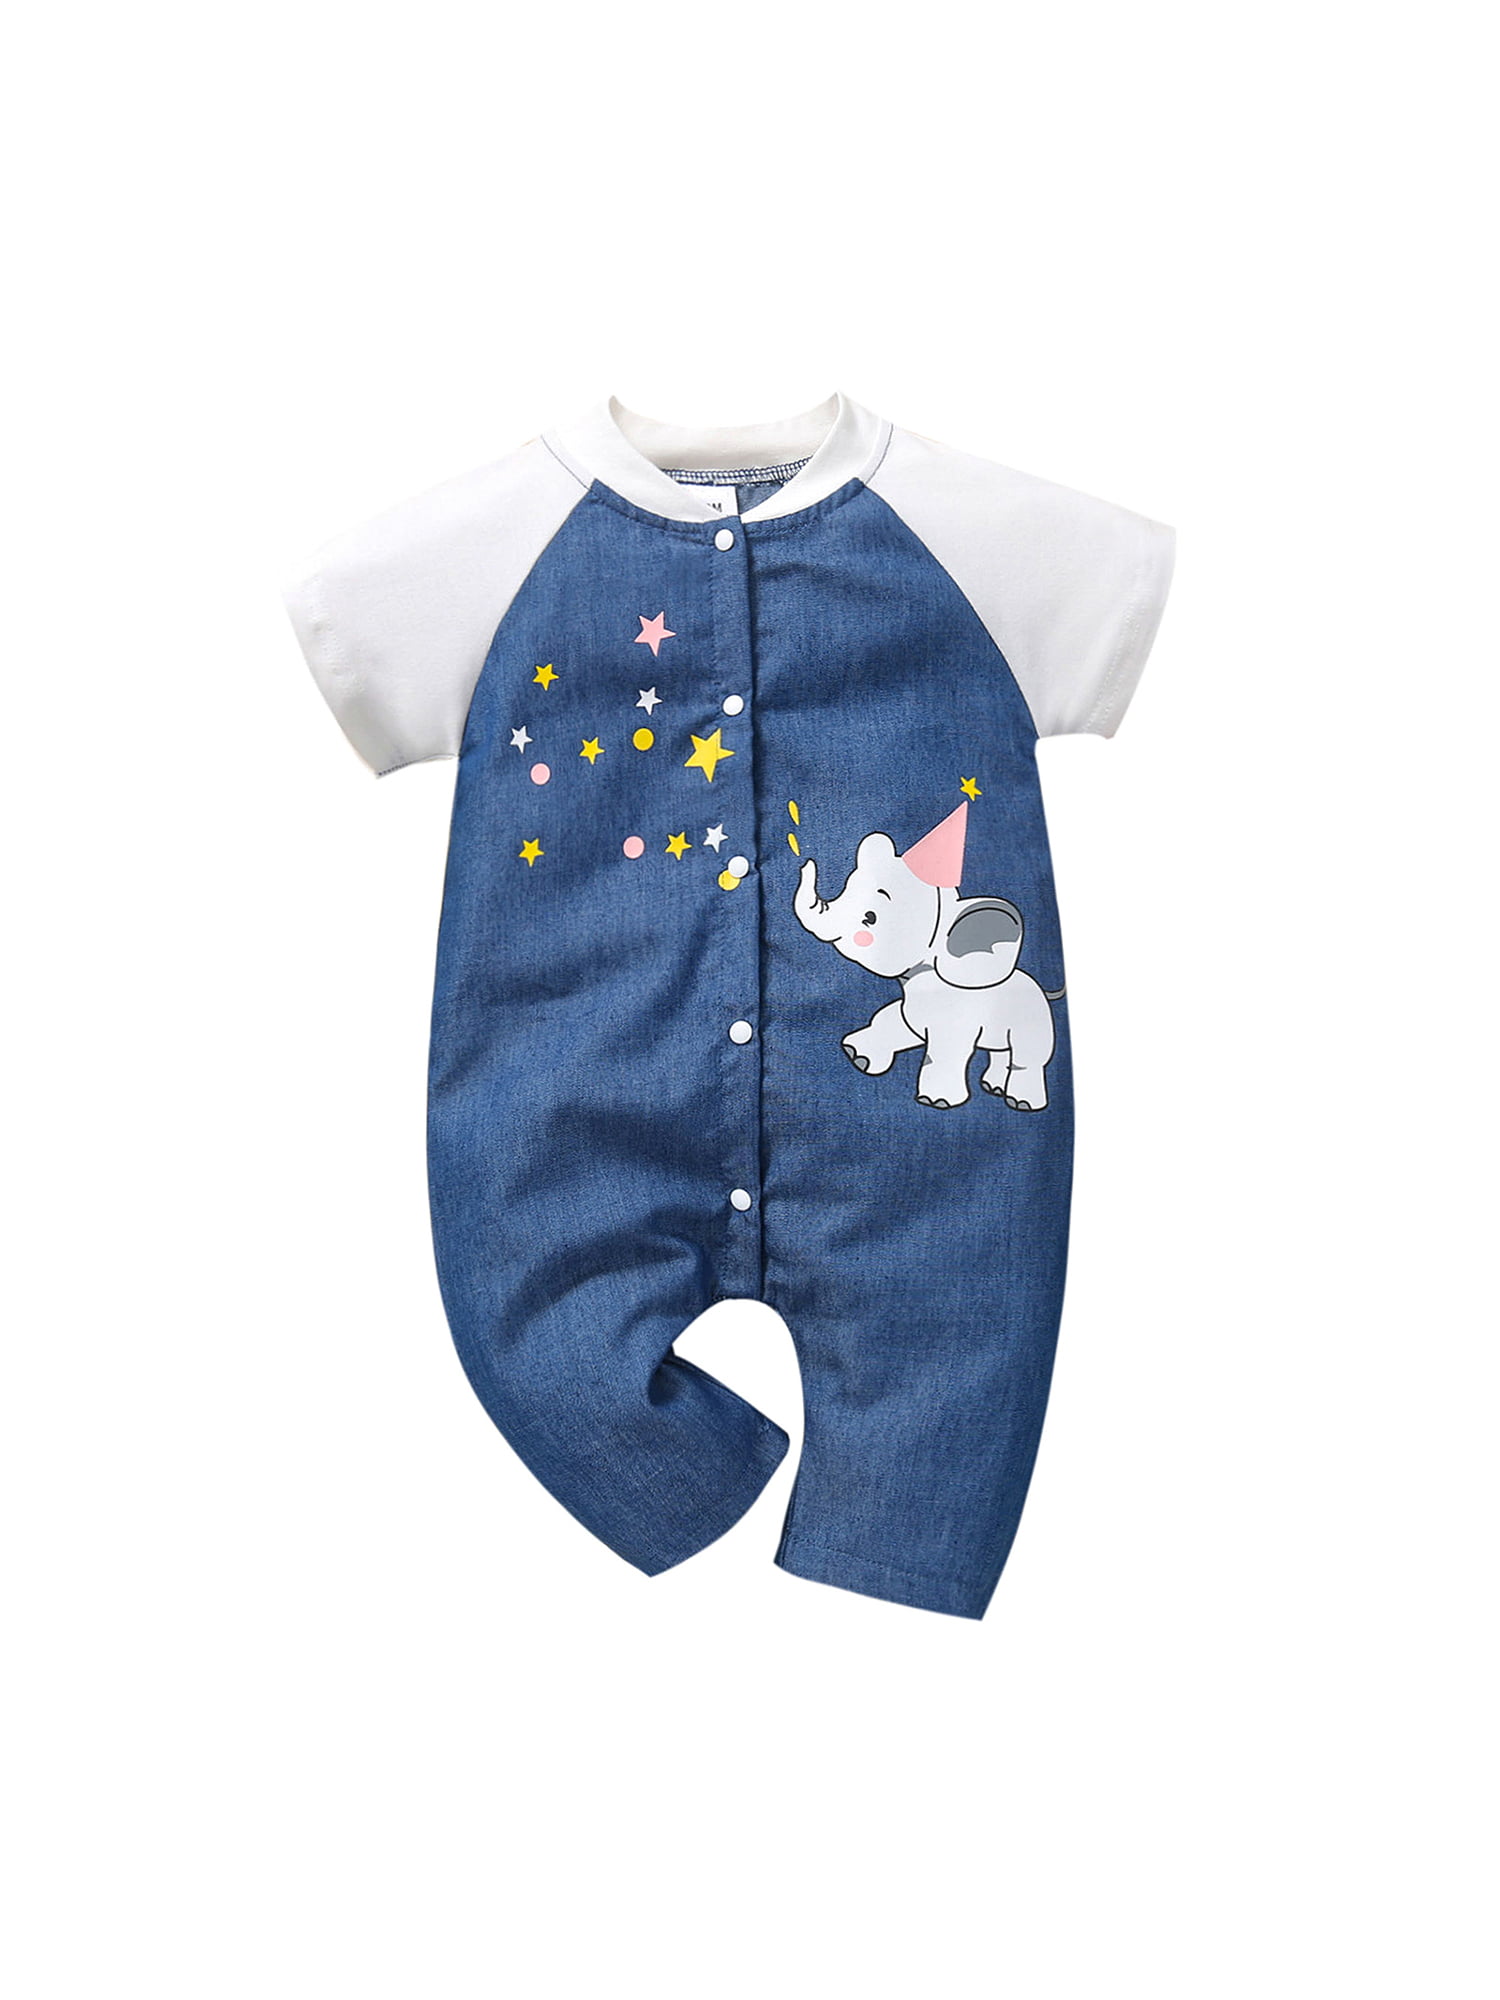 Riverdalin Baby Girls Boys One-Piece Rompers Short Sleeve Letter Elephant Print Jumpsuit Tops Bodysuit for Infant